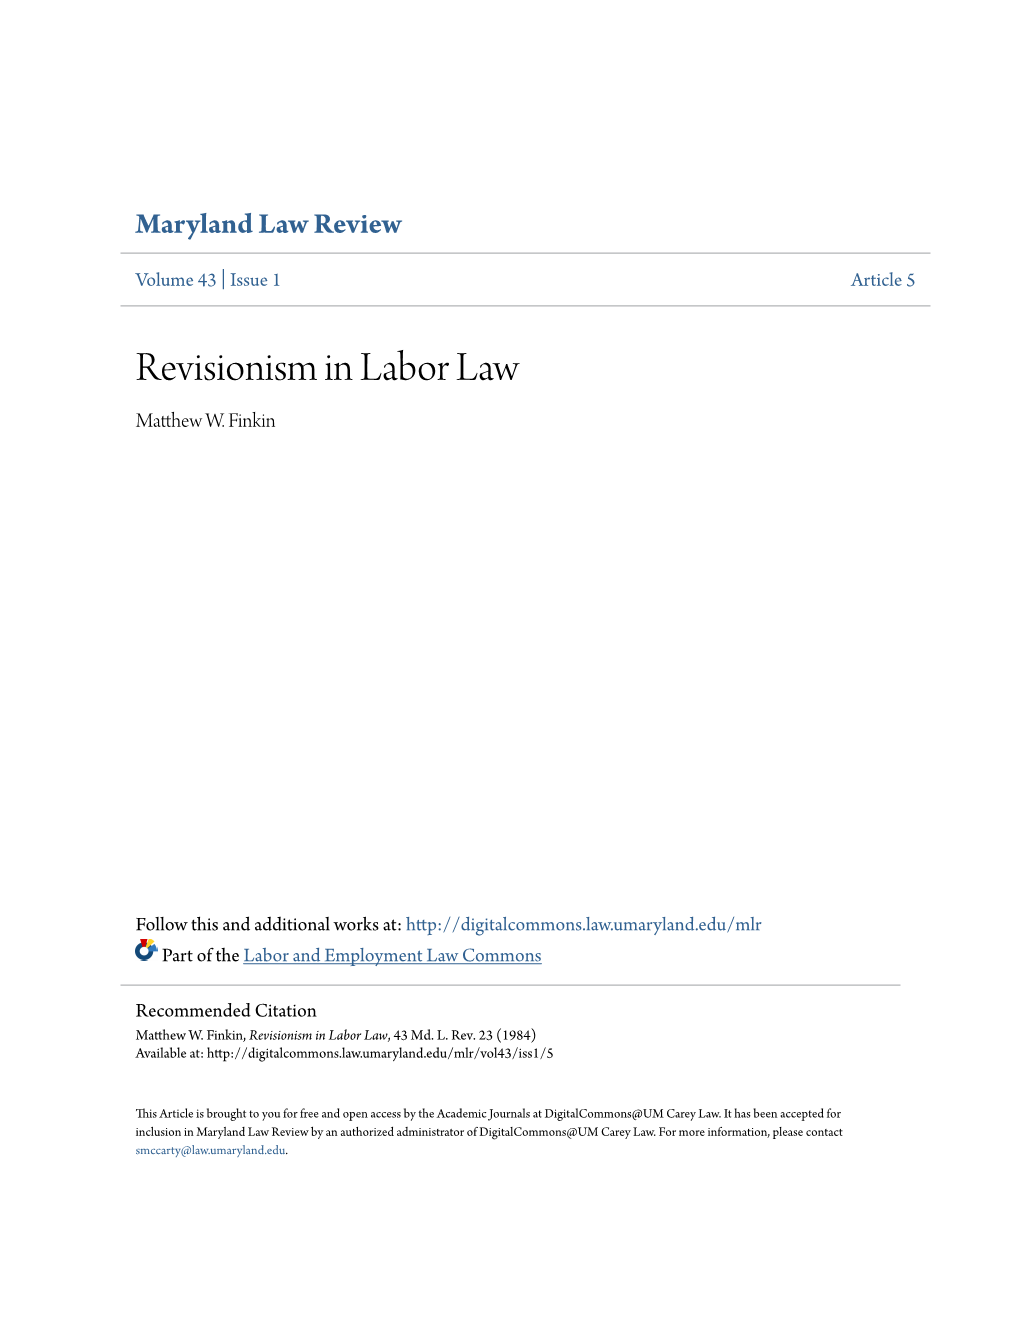 Revisionism in Labor Law Matthew .W Finkin